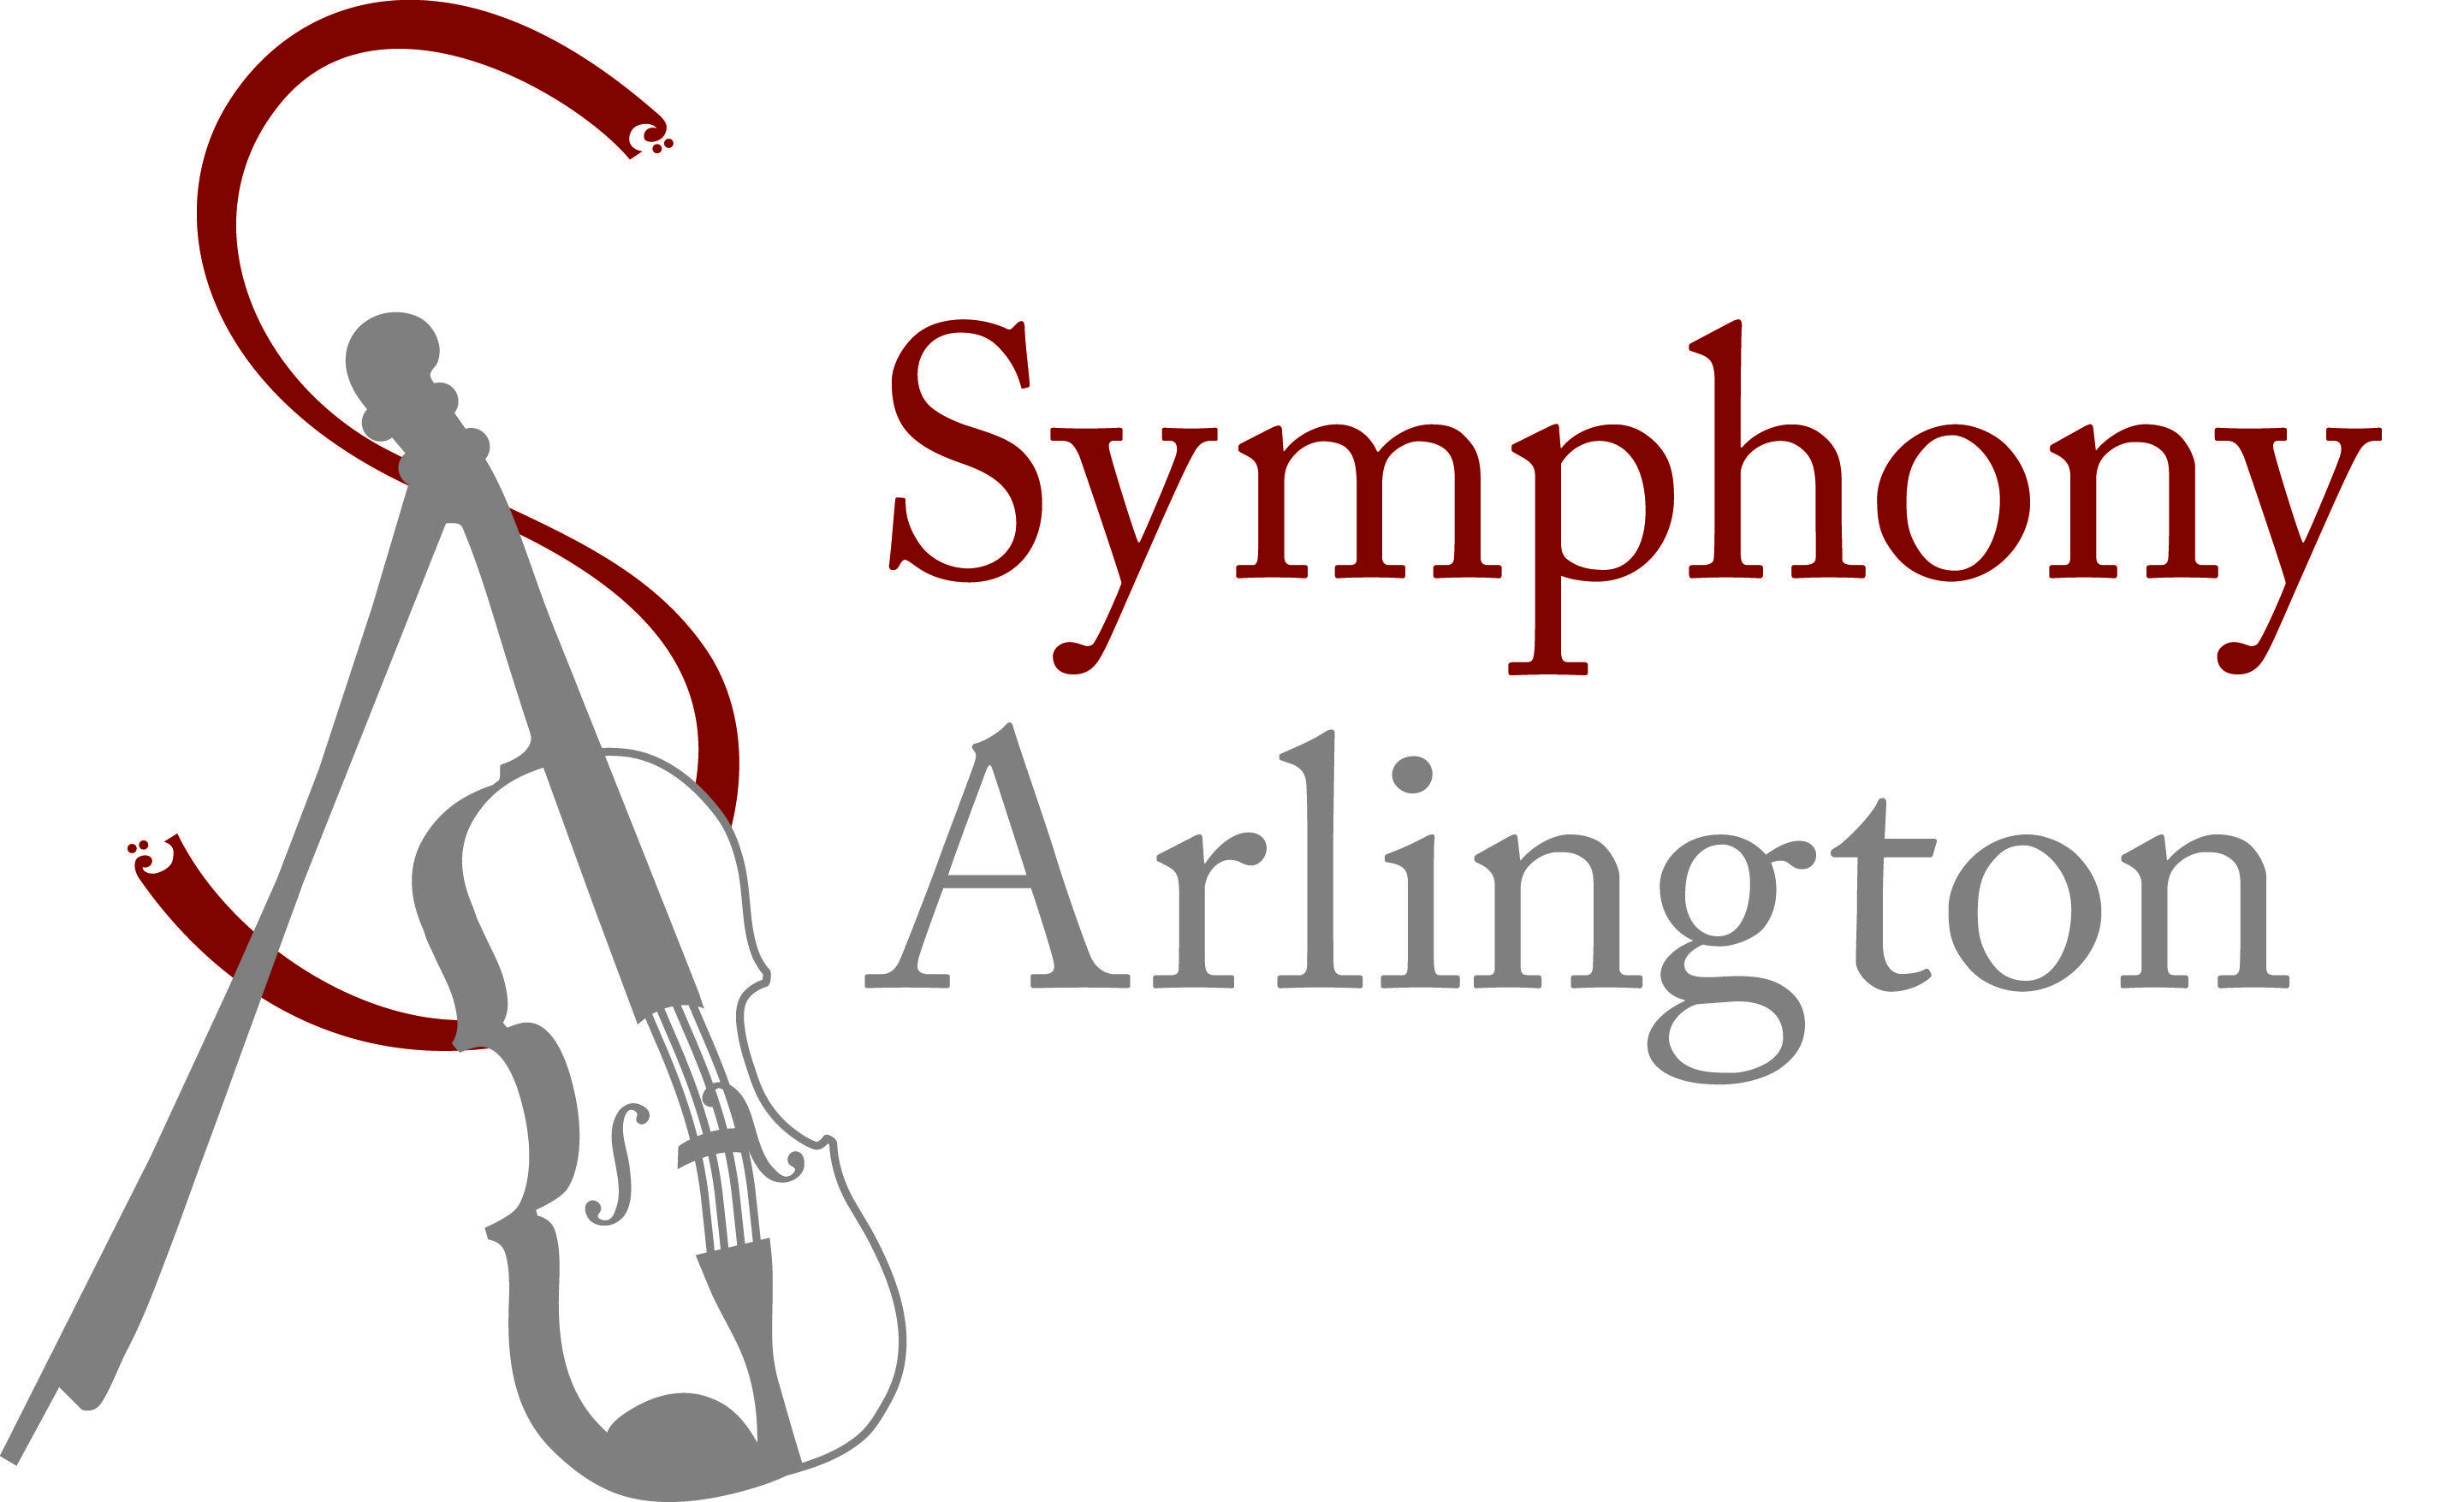 Arlington Logo - symphony arlington logo - Downtown Arlington